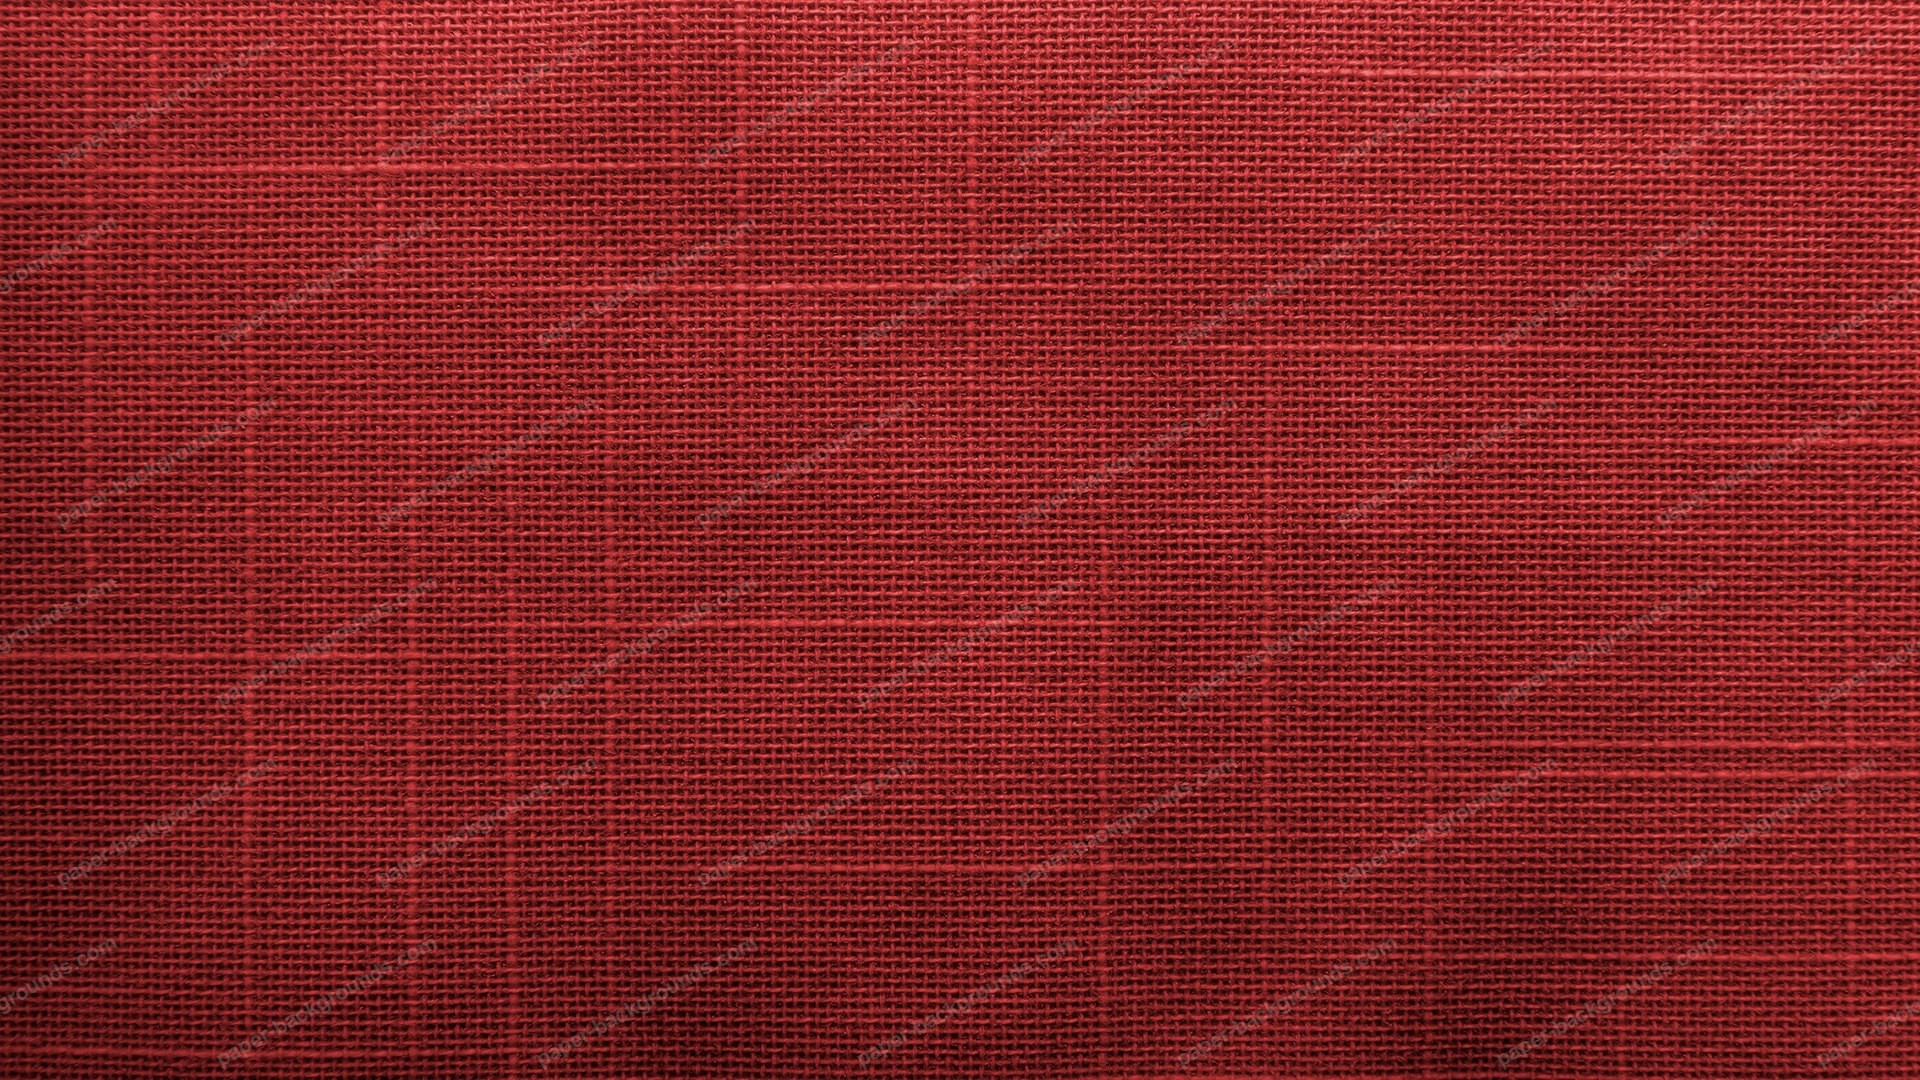 1920x1080 ... Tri Nylon Texture HD Wallpaper - Picsnook ...